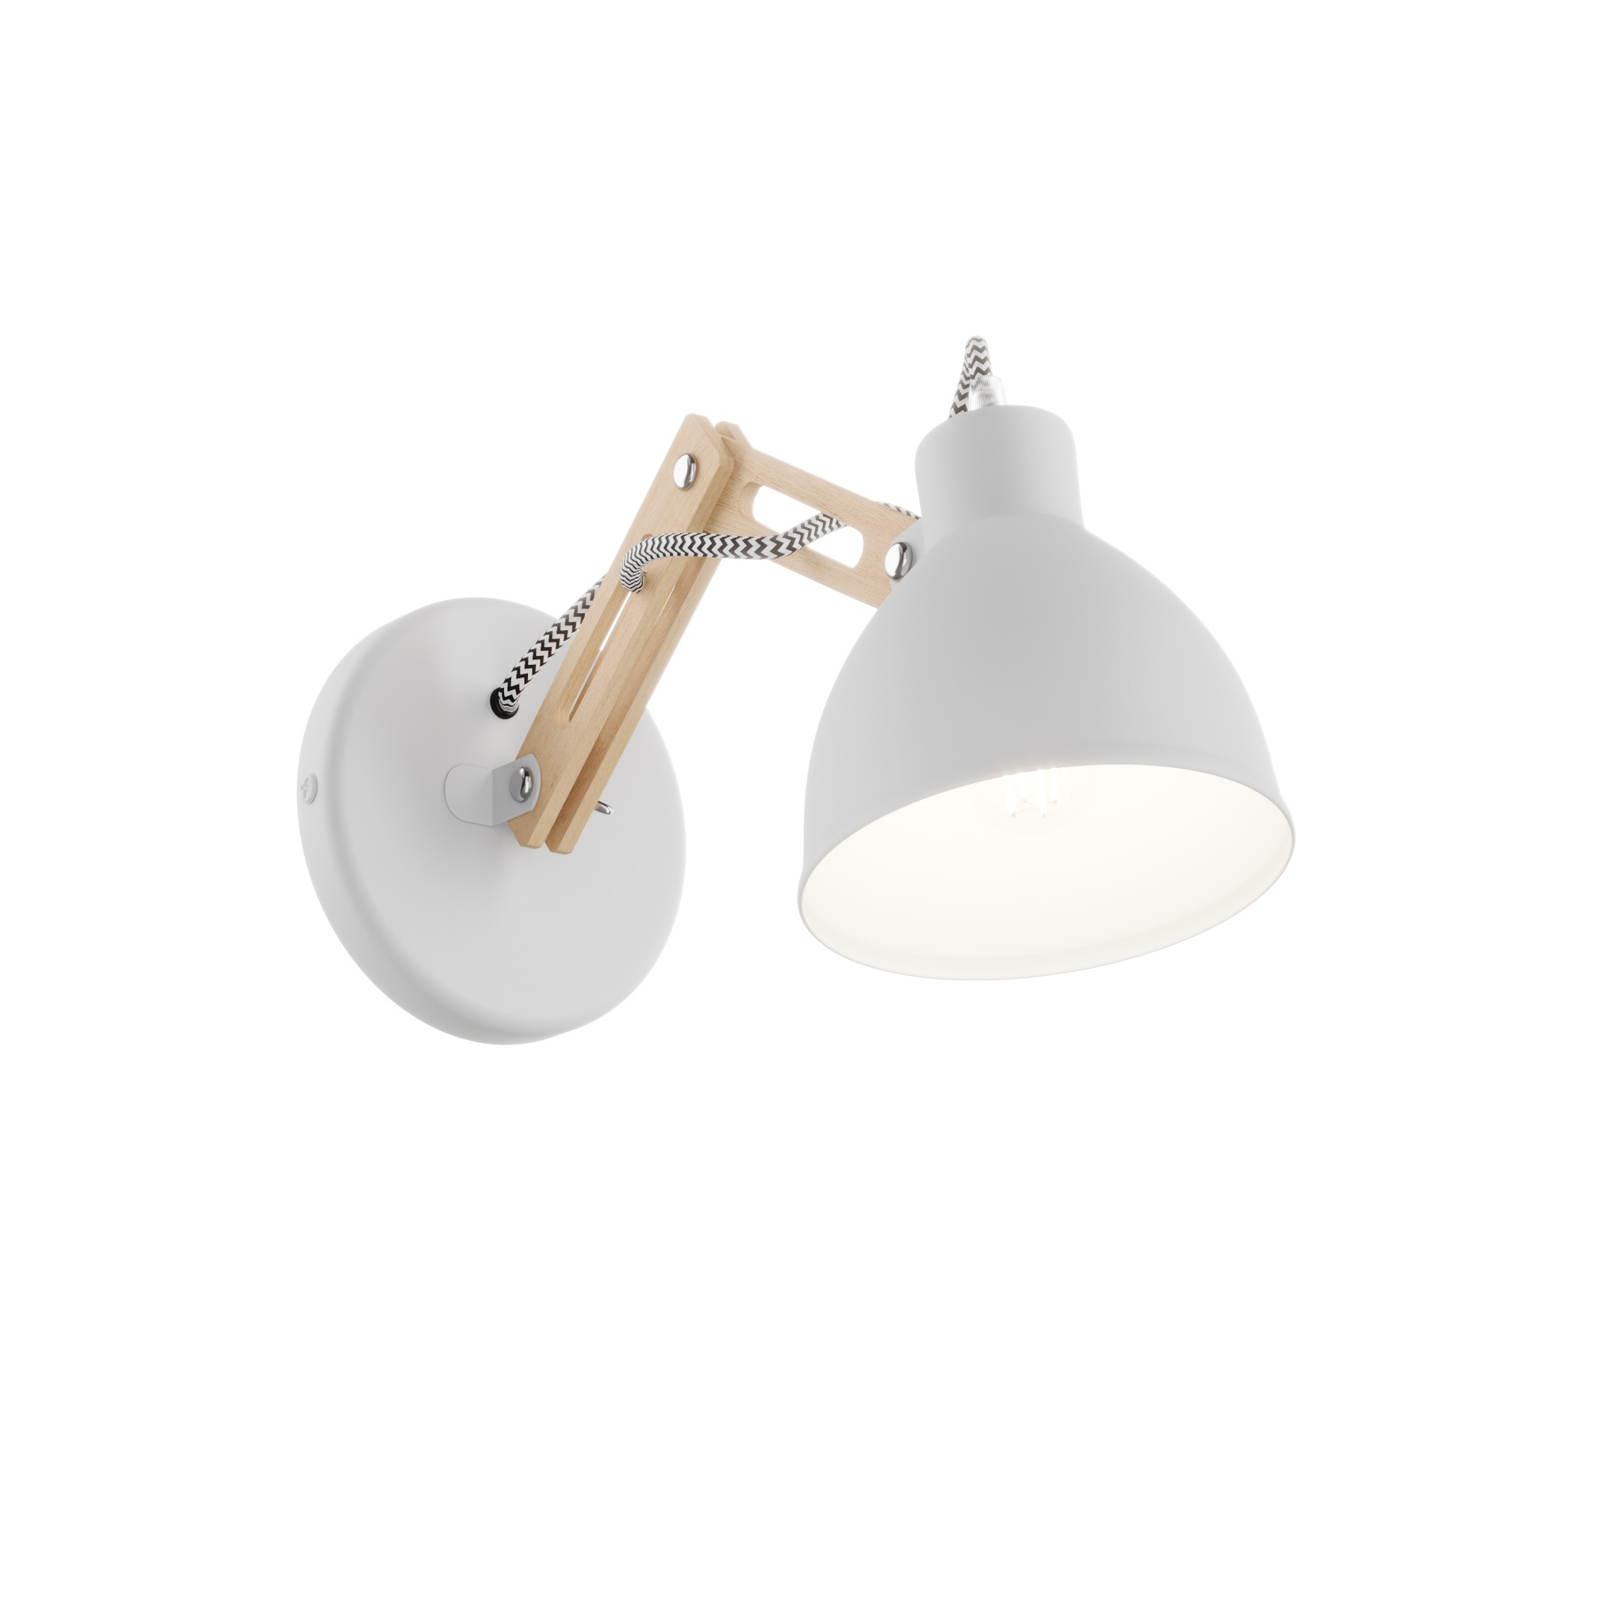 Skansen wall lamp, adjustable wooden arm, white